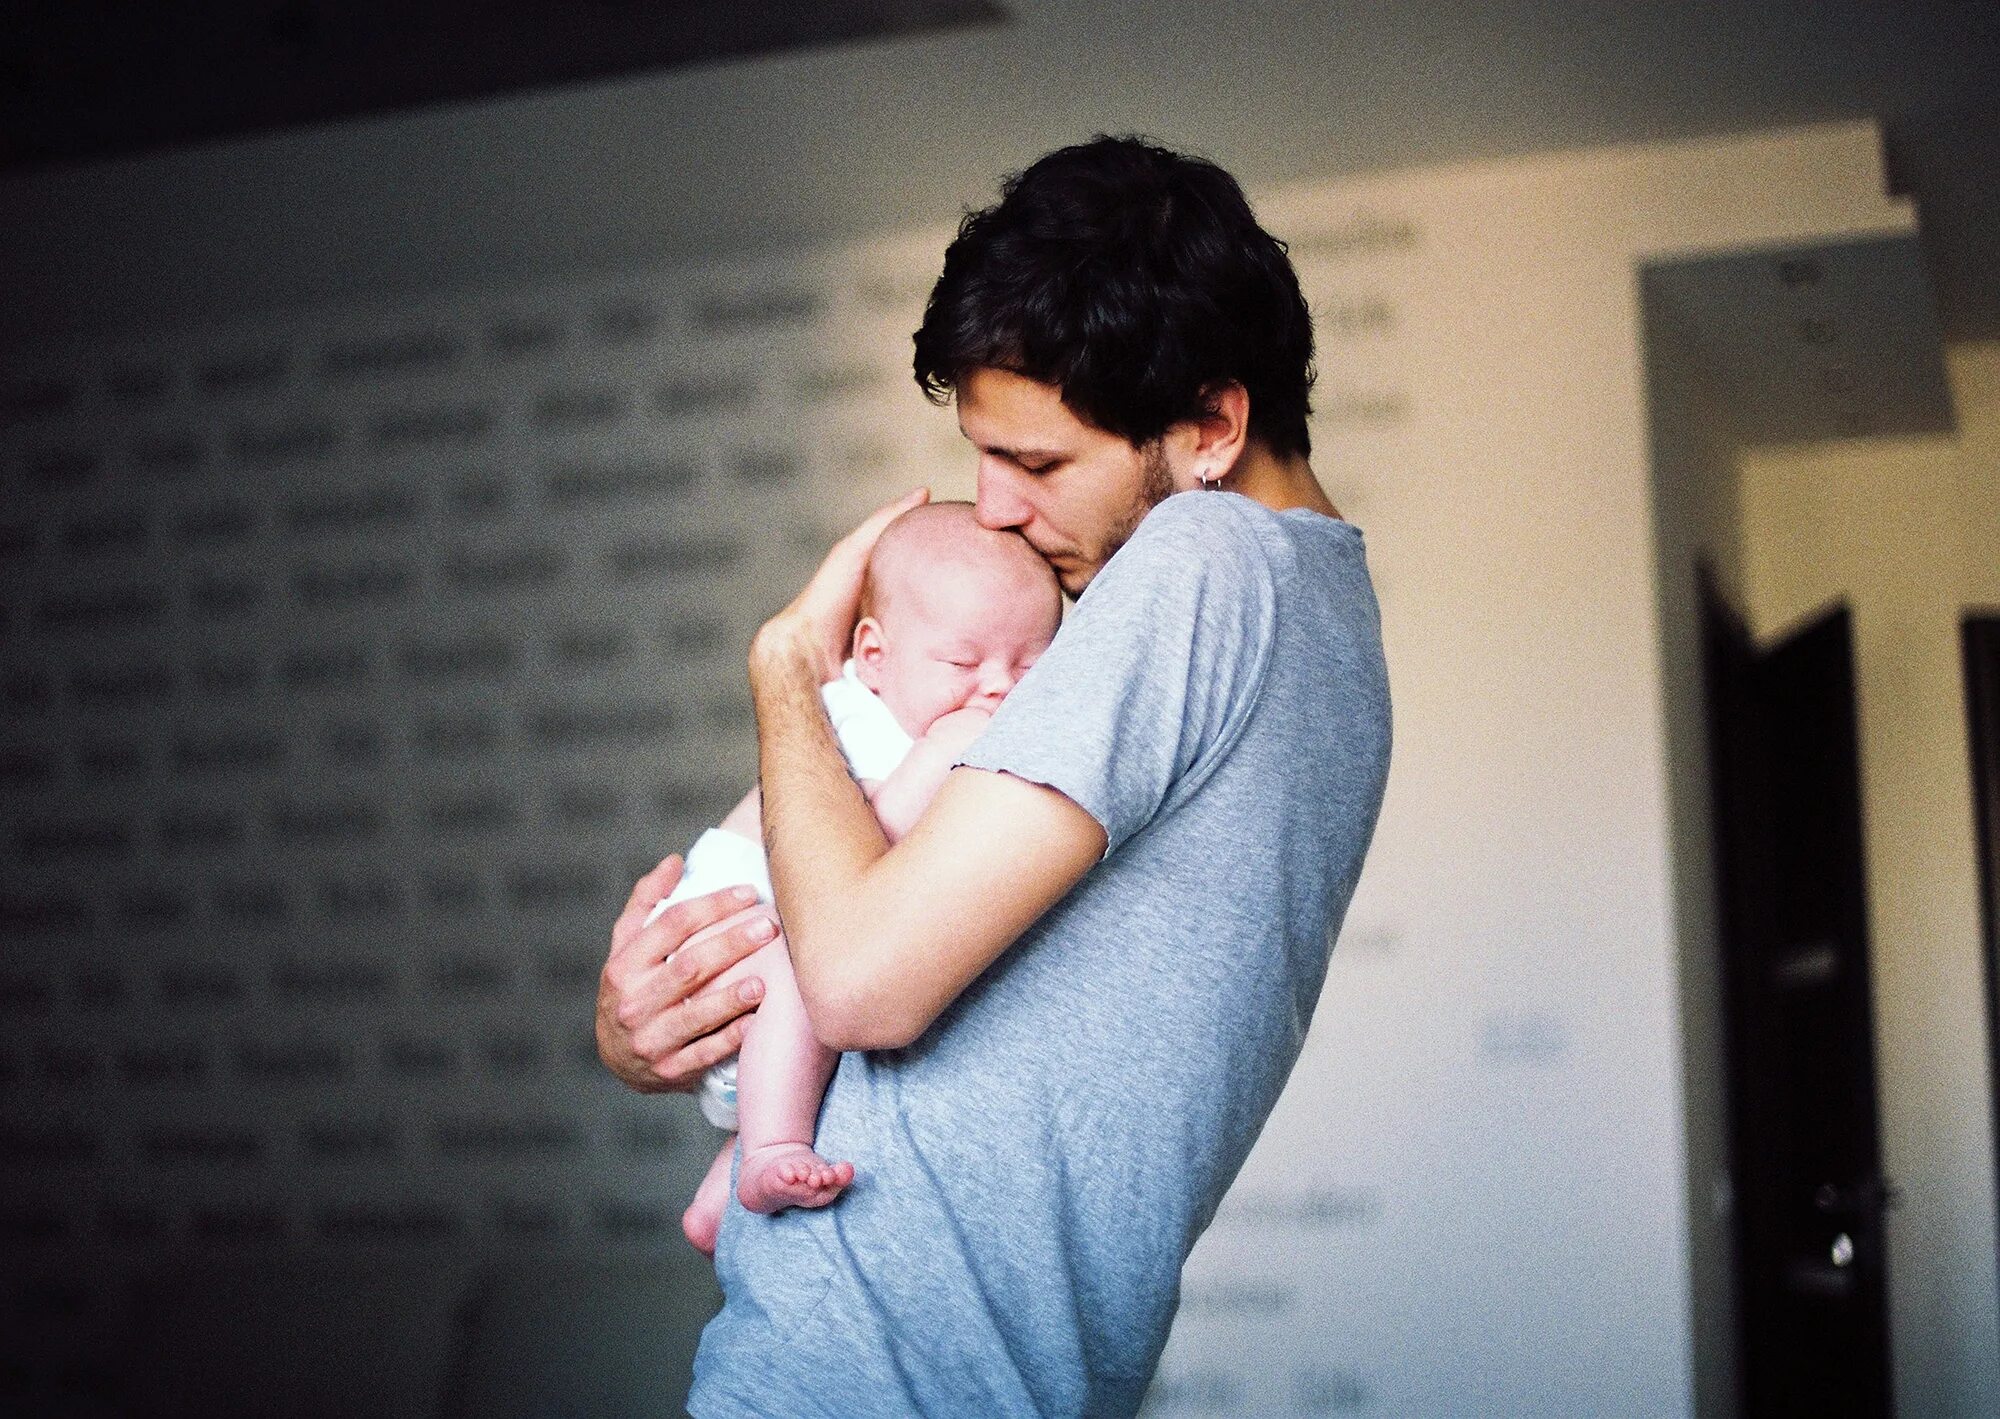 Мужчина с ребенком на руках. Ребенок на руках. Мужчина держит ребенка. Ужчига держит ребёнка в руках. Заботиться о чужом ребенке